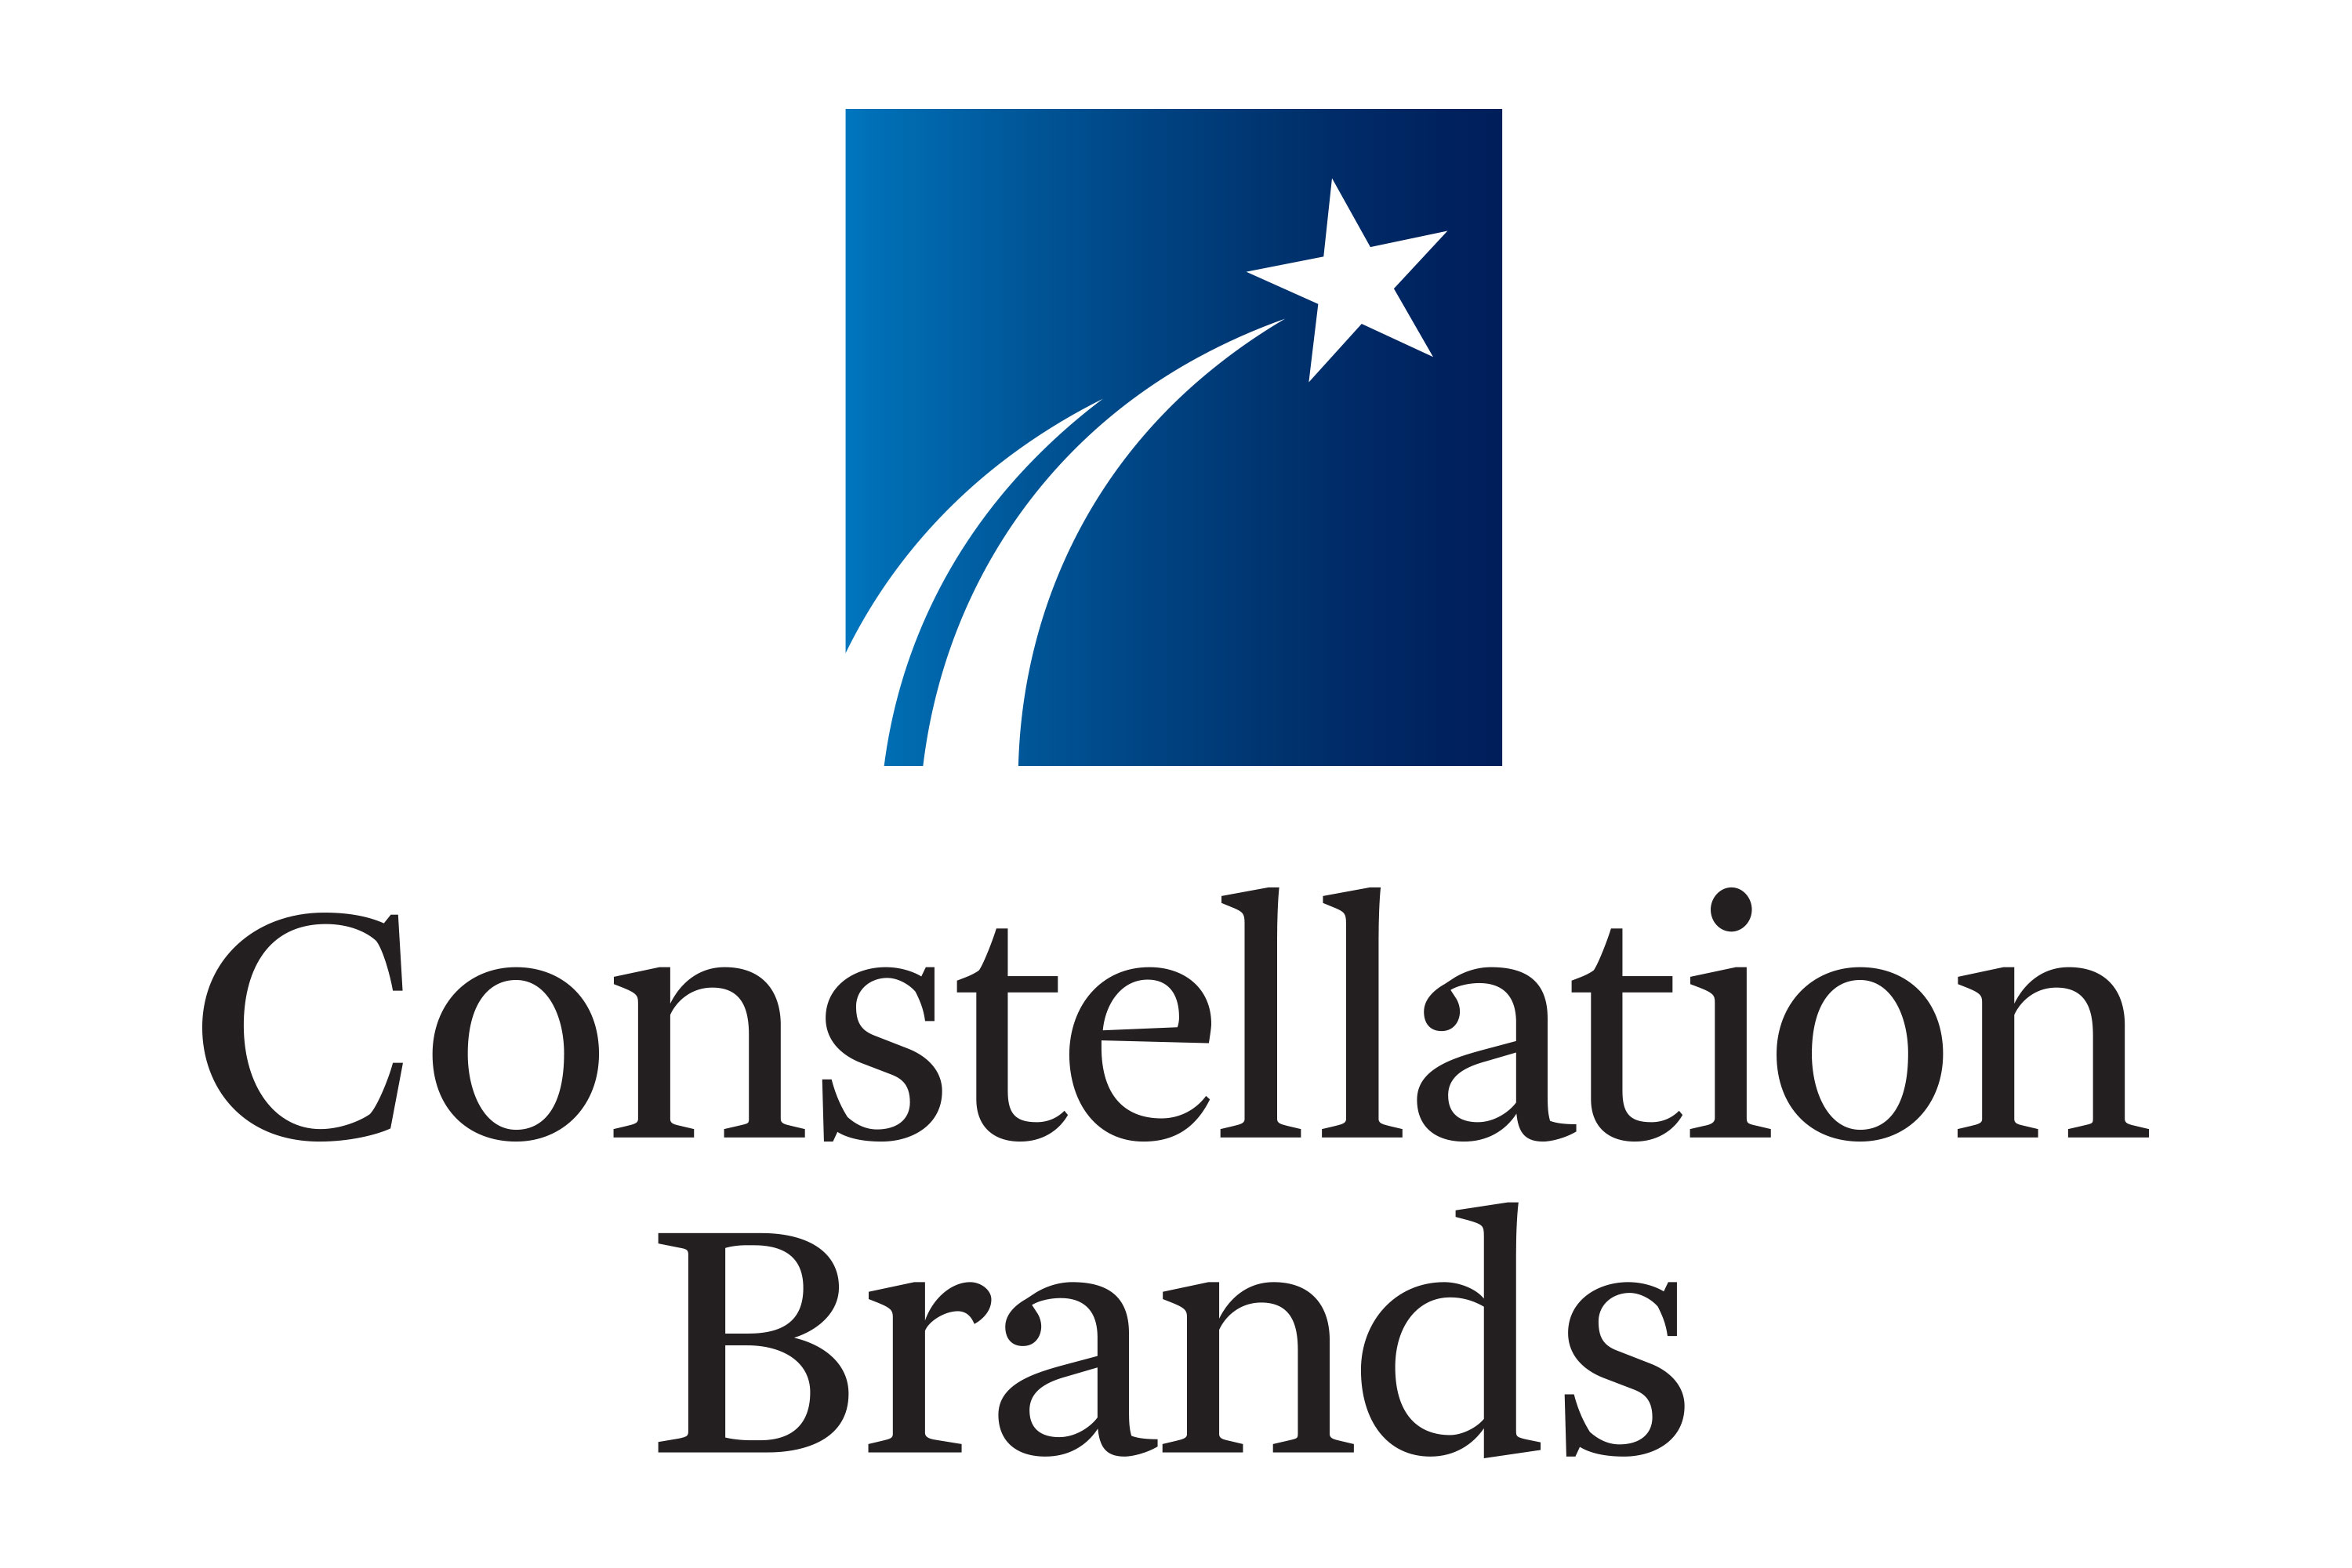 Sponsor - Constellation